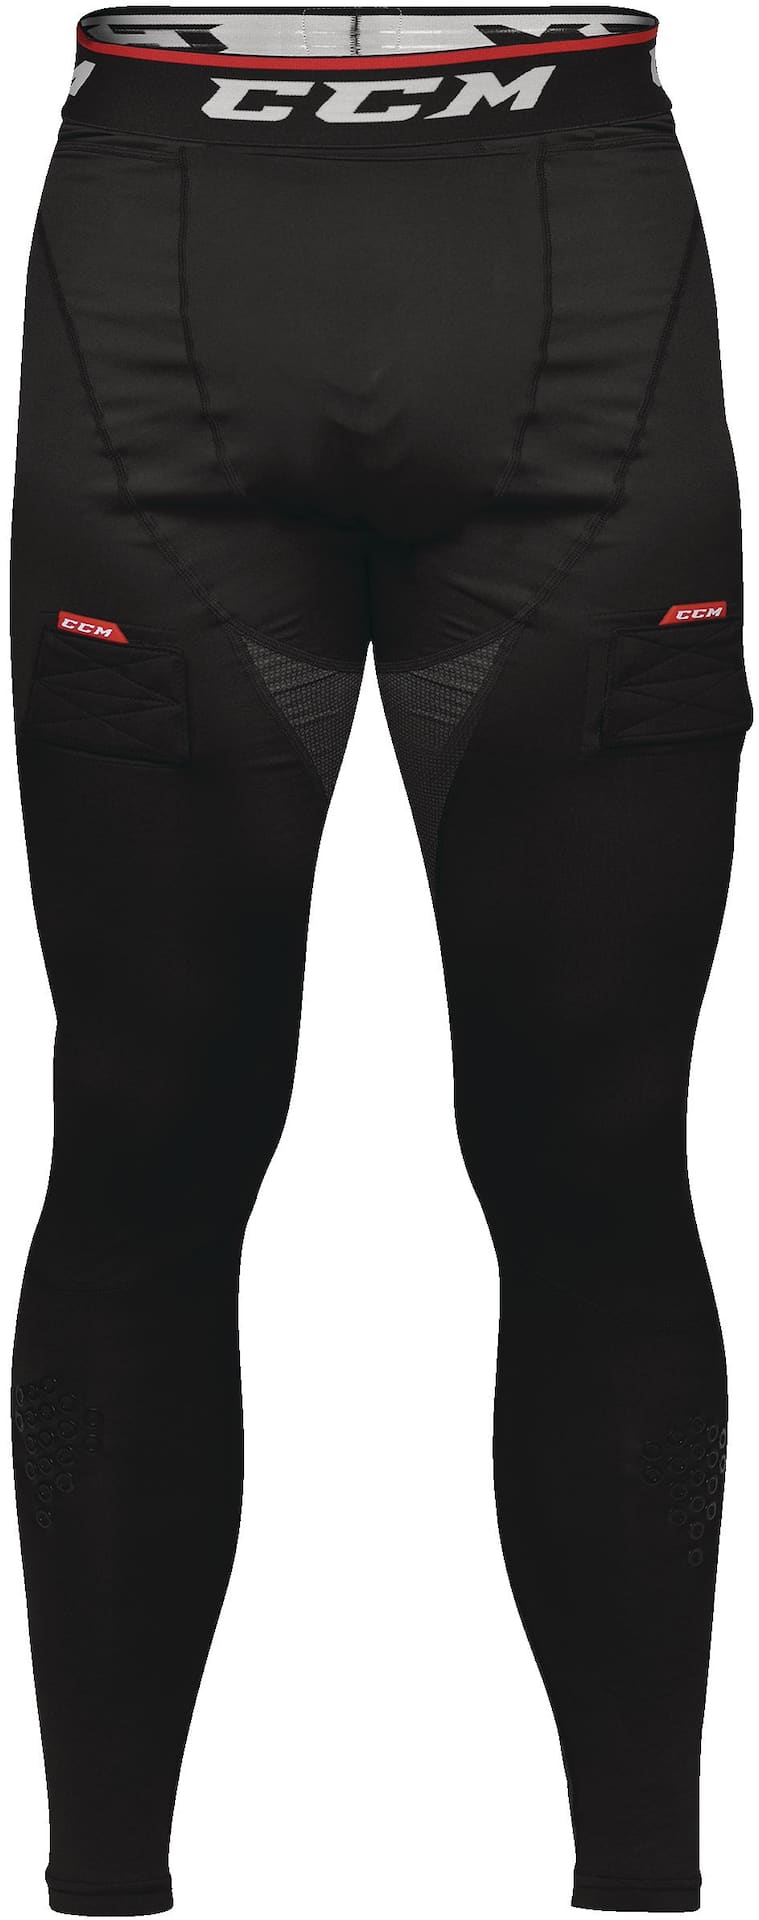 Mesh compressive core control 65 cm ankle-length leggings